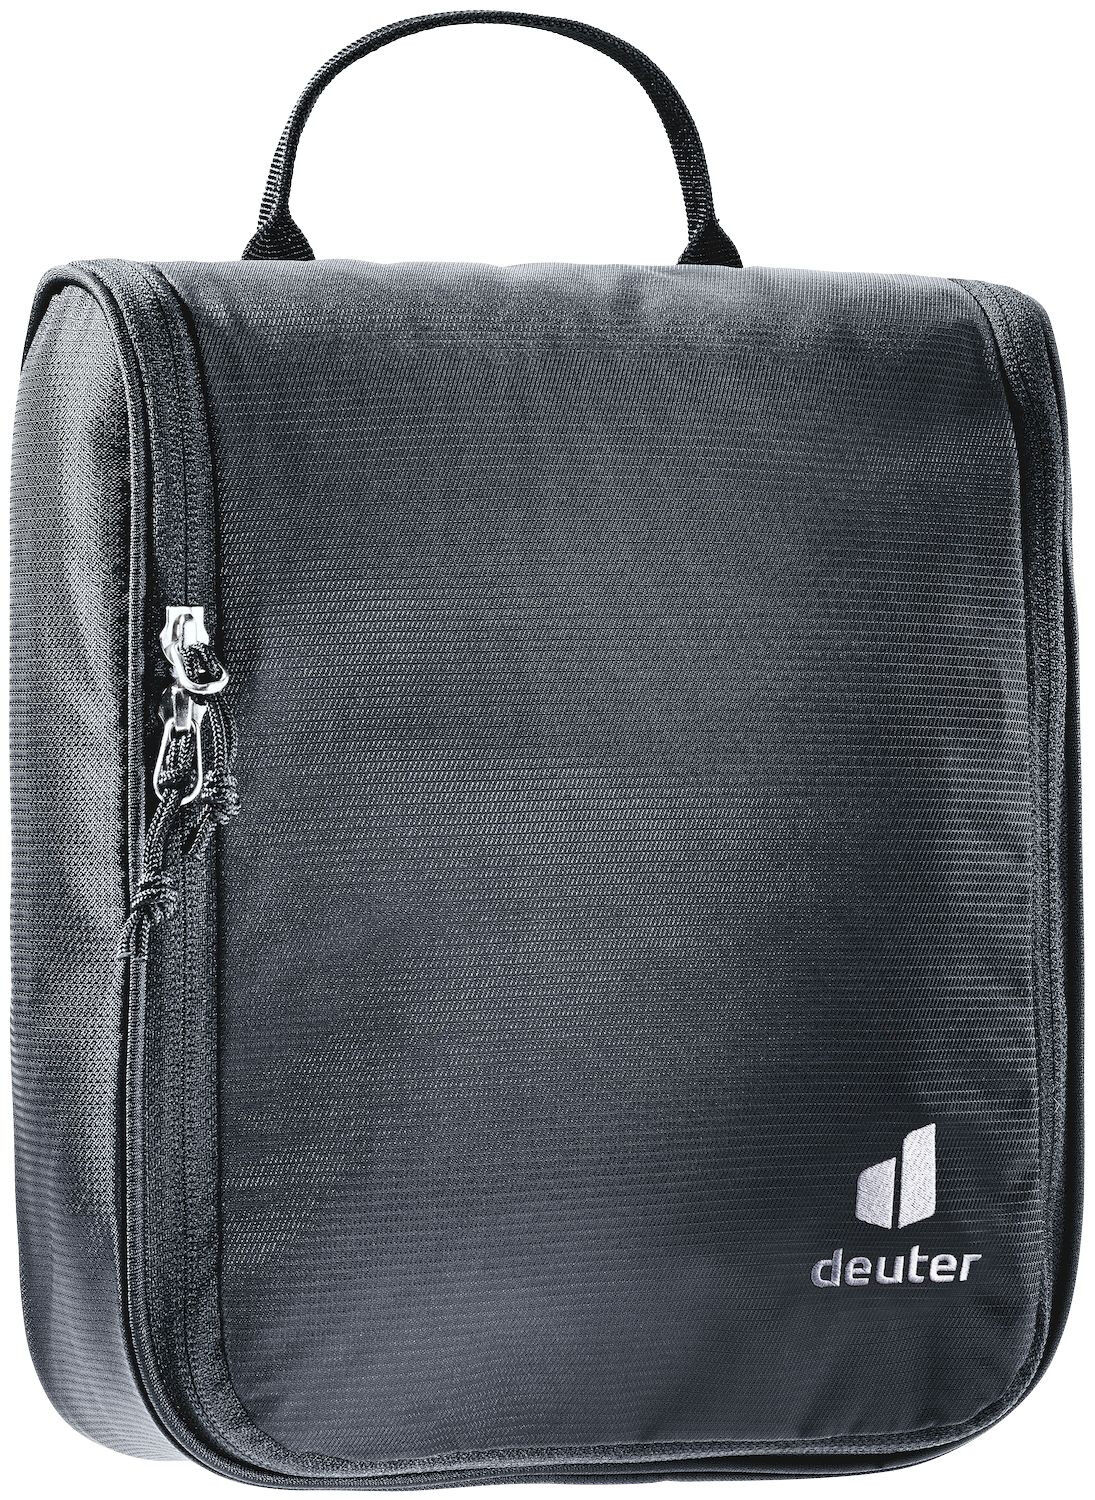 Deuter Wash Center II - Wash bag